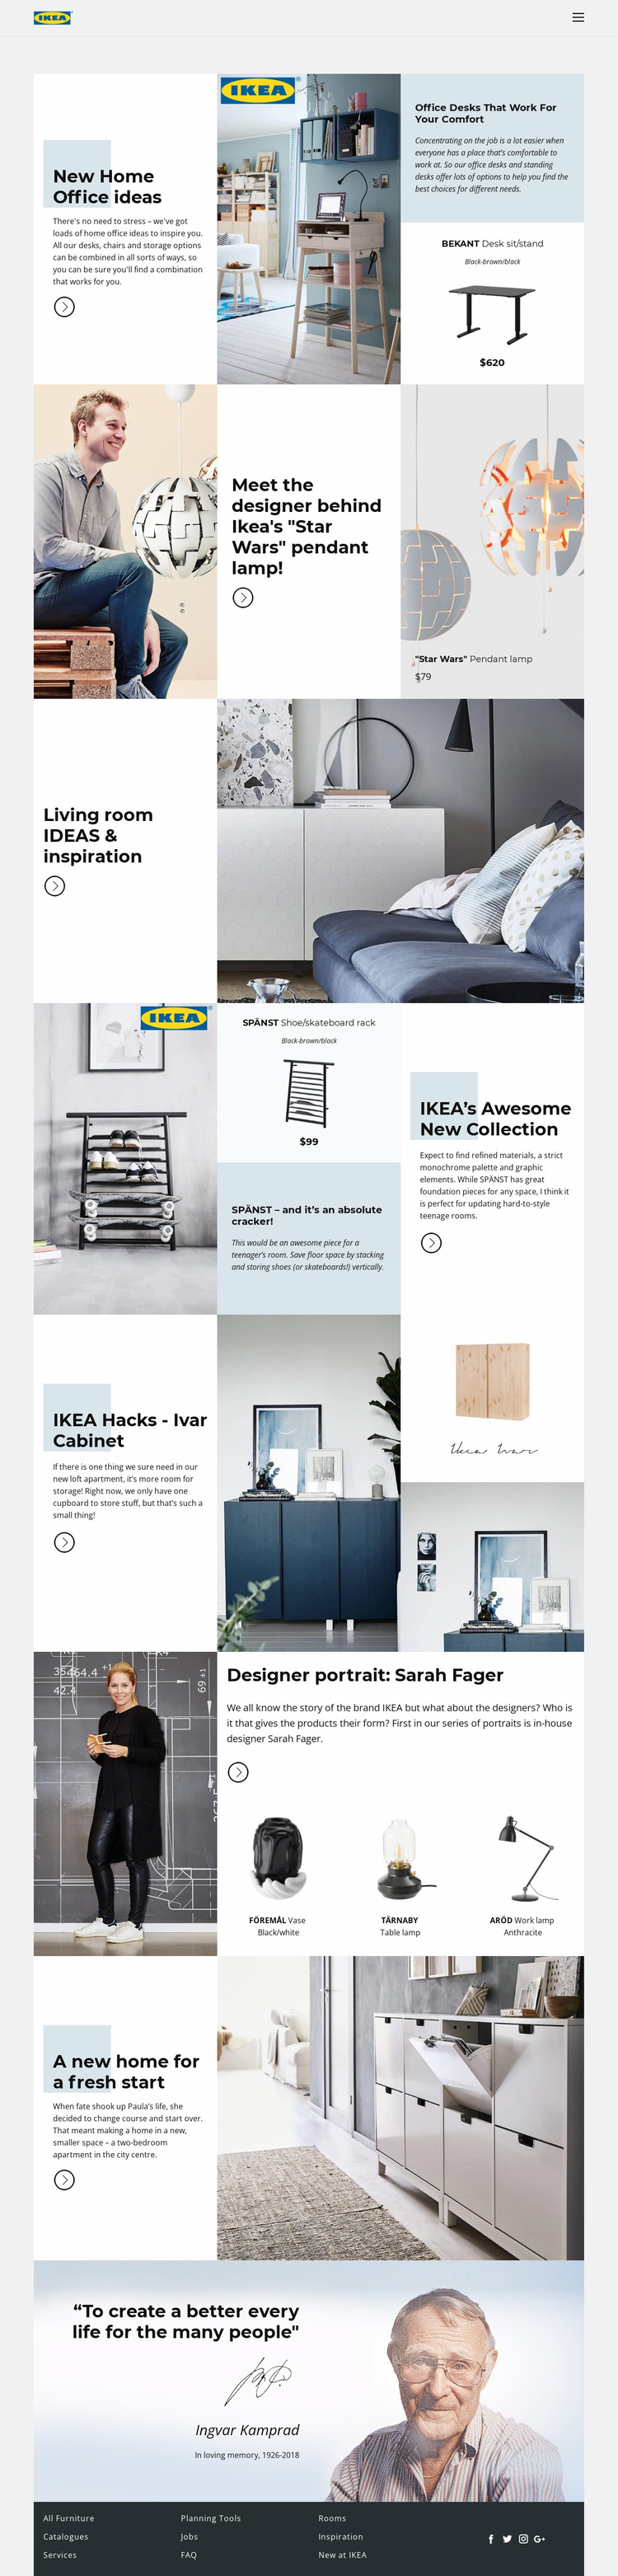 Inspiration from IKEA Website Mockup